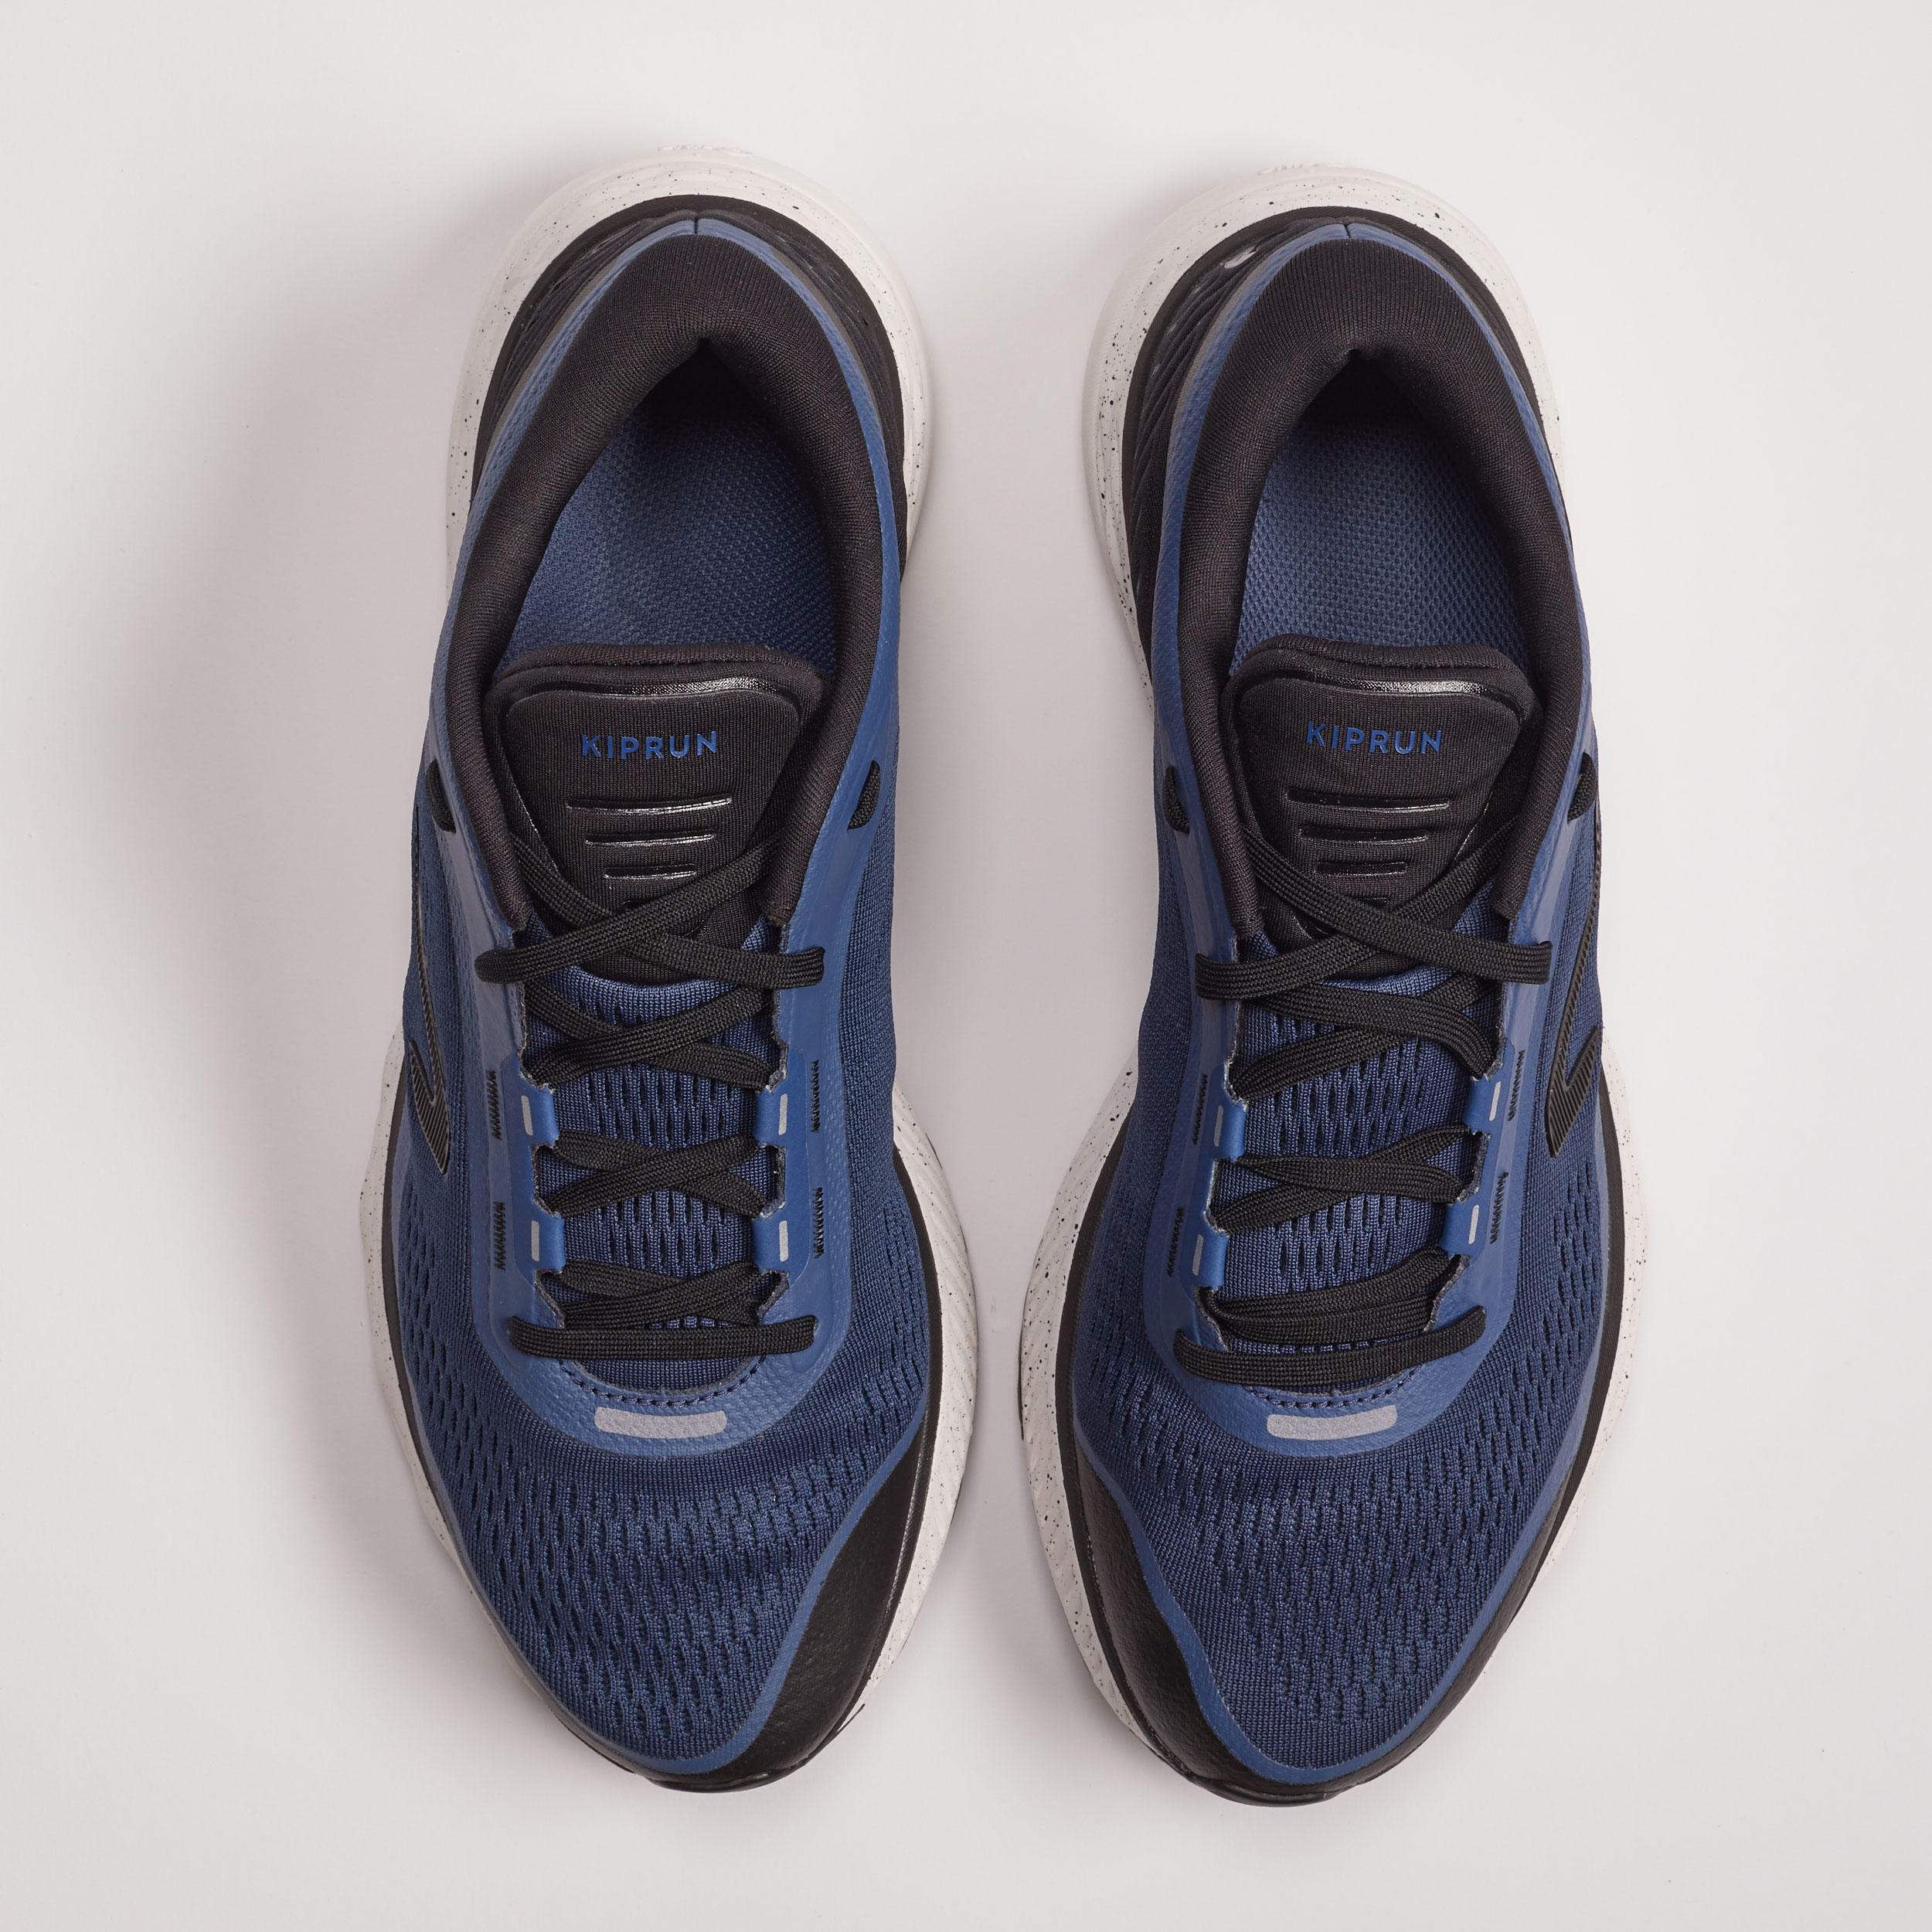 Buy Men's Marathon Running Shoes Kiprun KS500 - Slate Blue - Limited  Edition Online